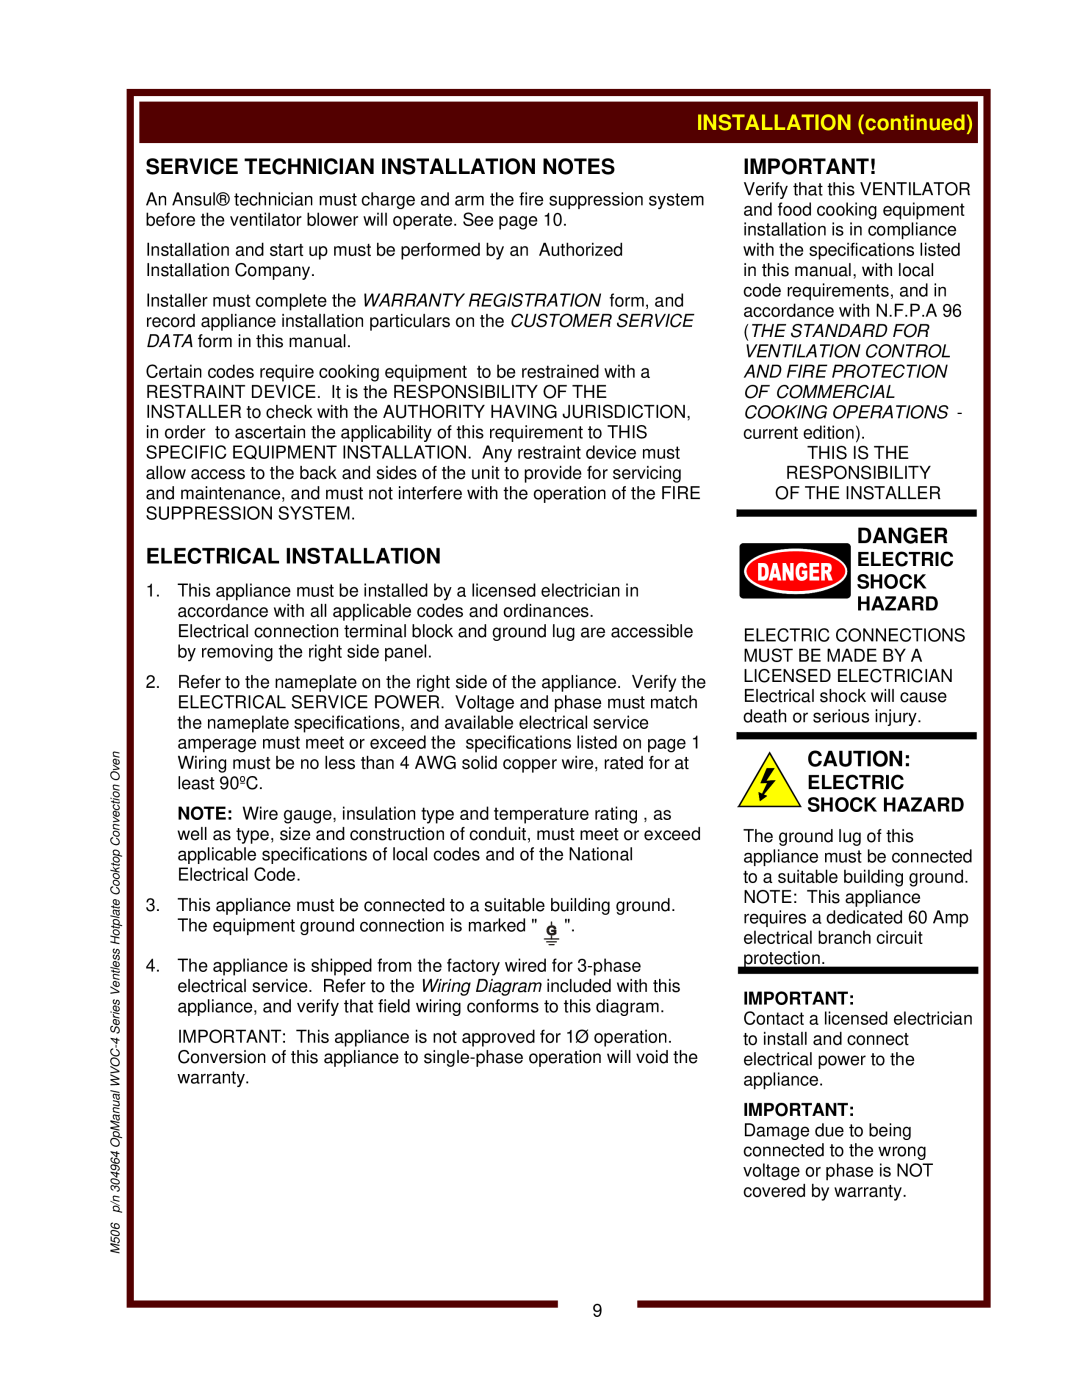 Wells WVOC-4HS Service Technician Installation Notes, Electrical Installation, Danger, Electric Shock Hazard 